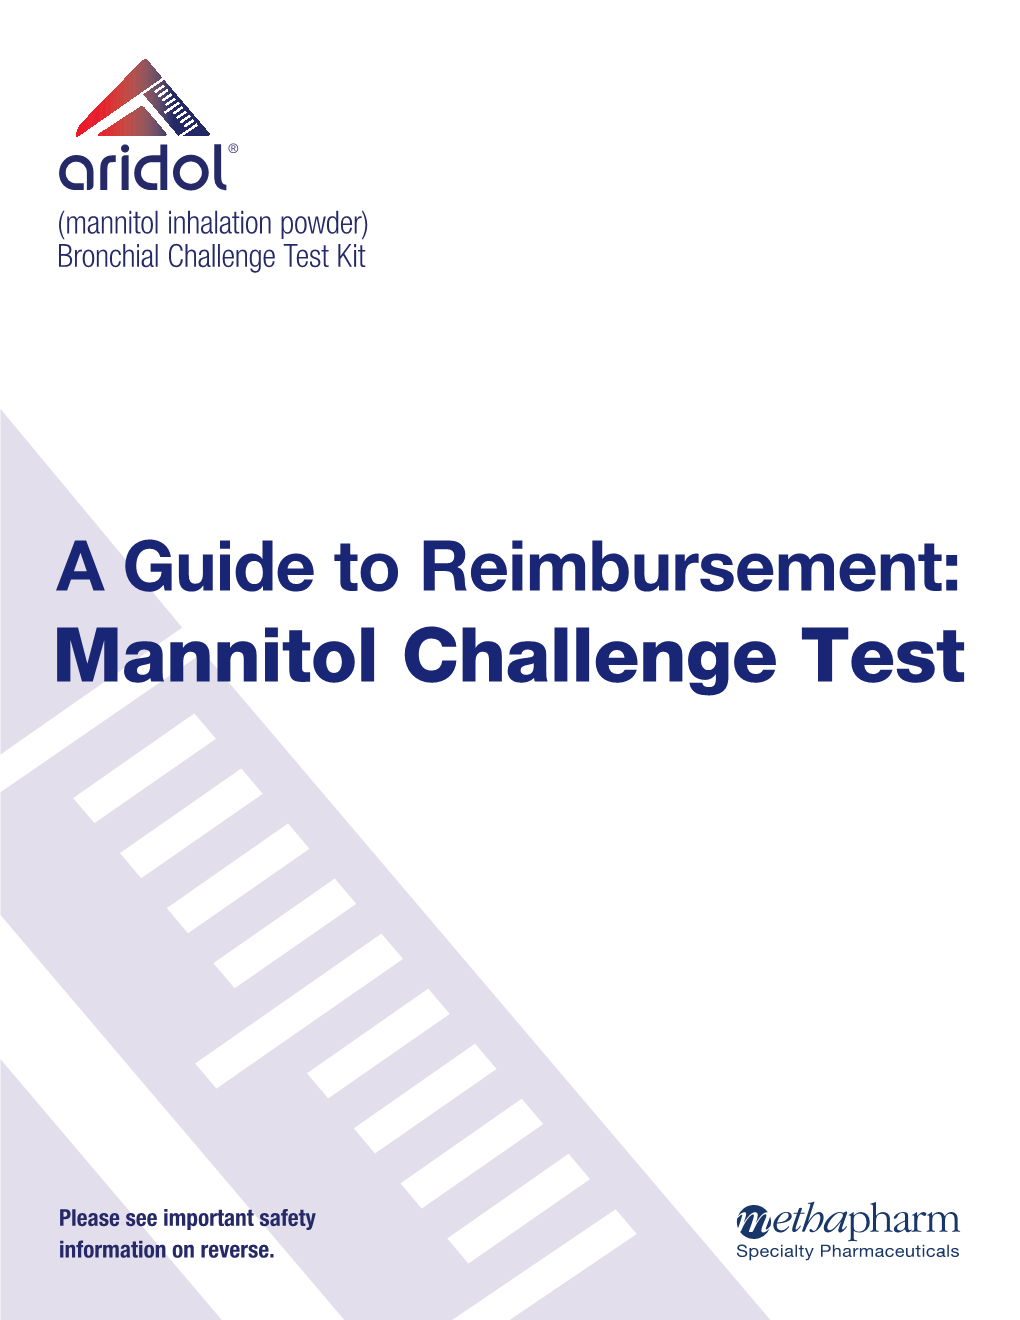 Mannitol Challenge Test